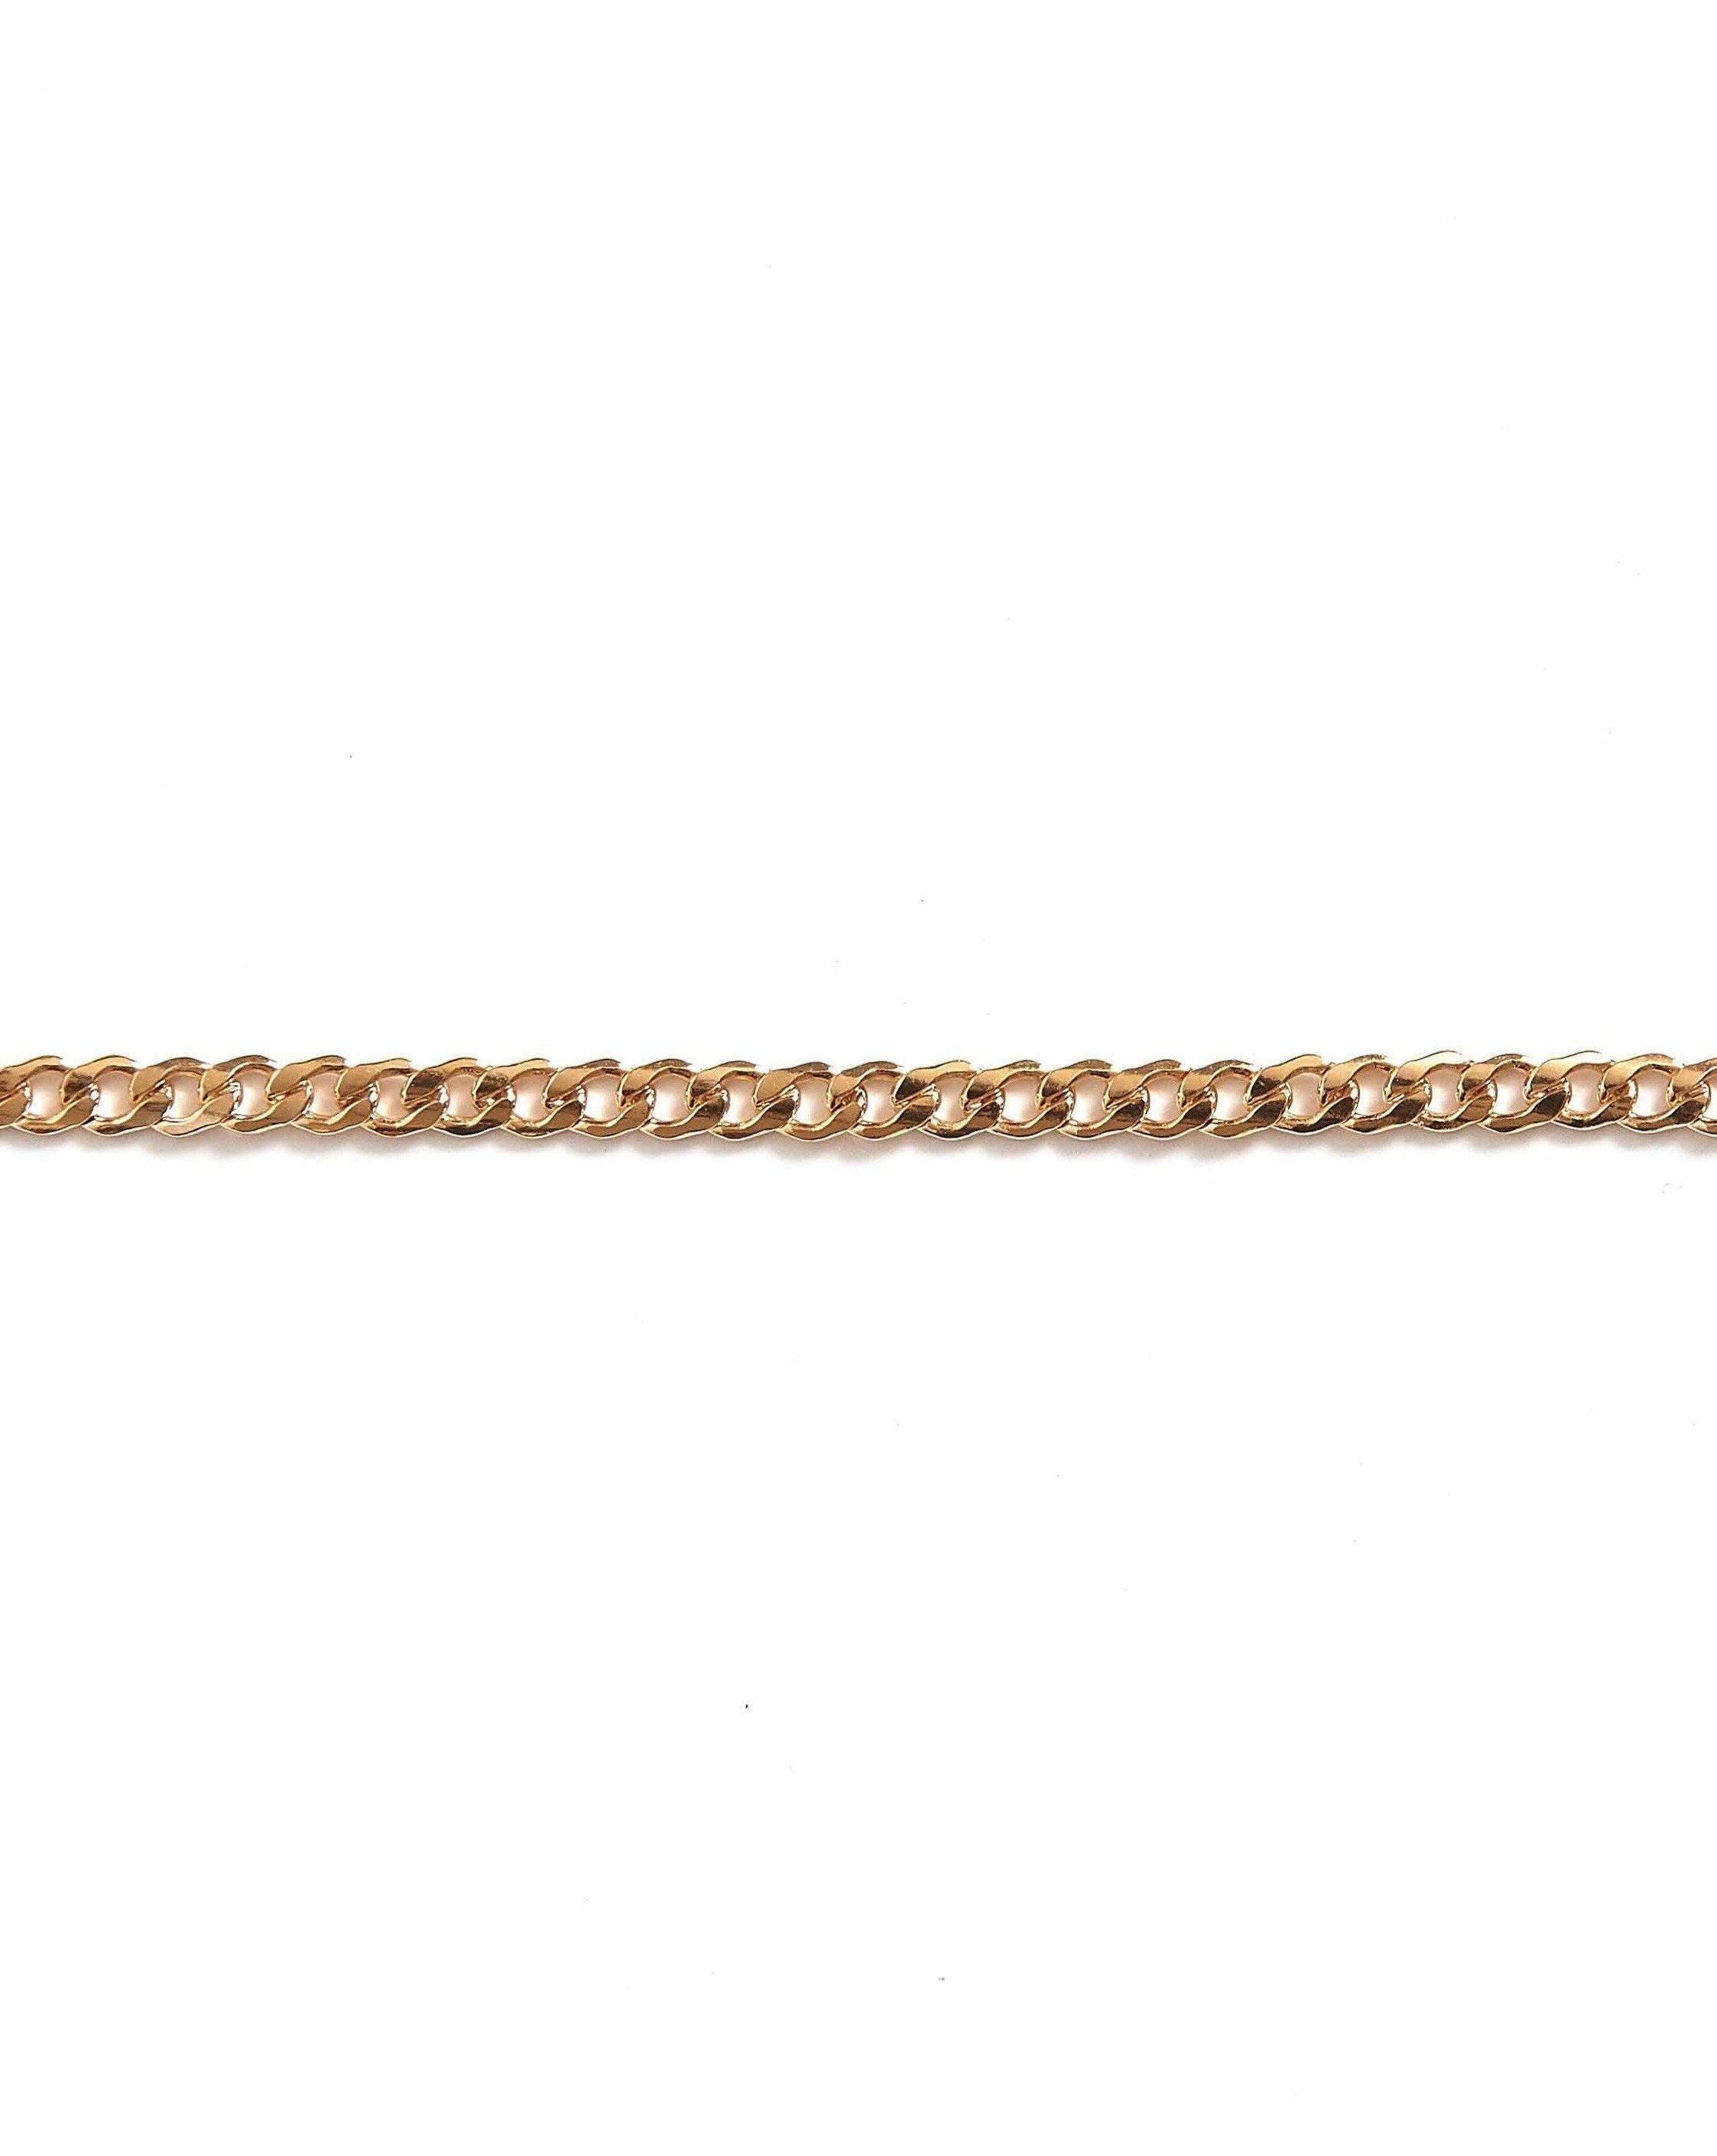 Braided Bracelet by KOZAKH. A 6 to 7 inch adjustable length chain bracelet in 14K Gold Filled.